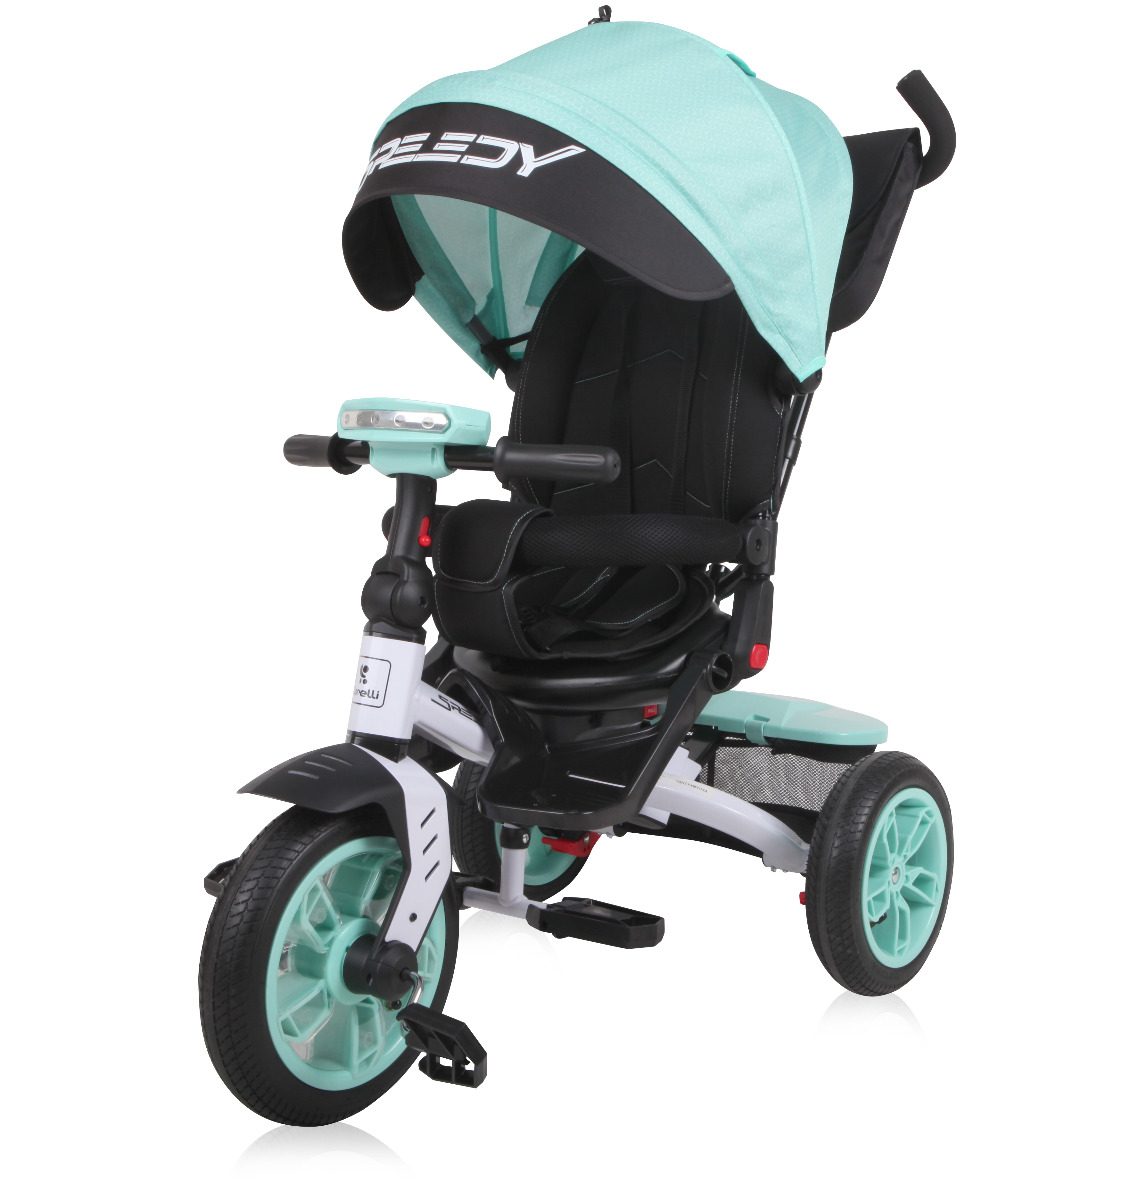 Tricicleta multifunctionala 4in1, Speedy, roti cu camera, scaun rotativ, Green & Black